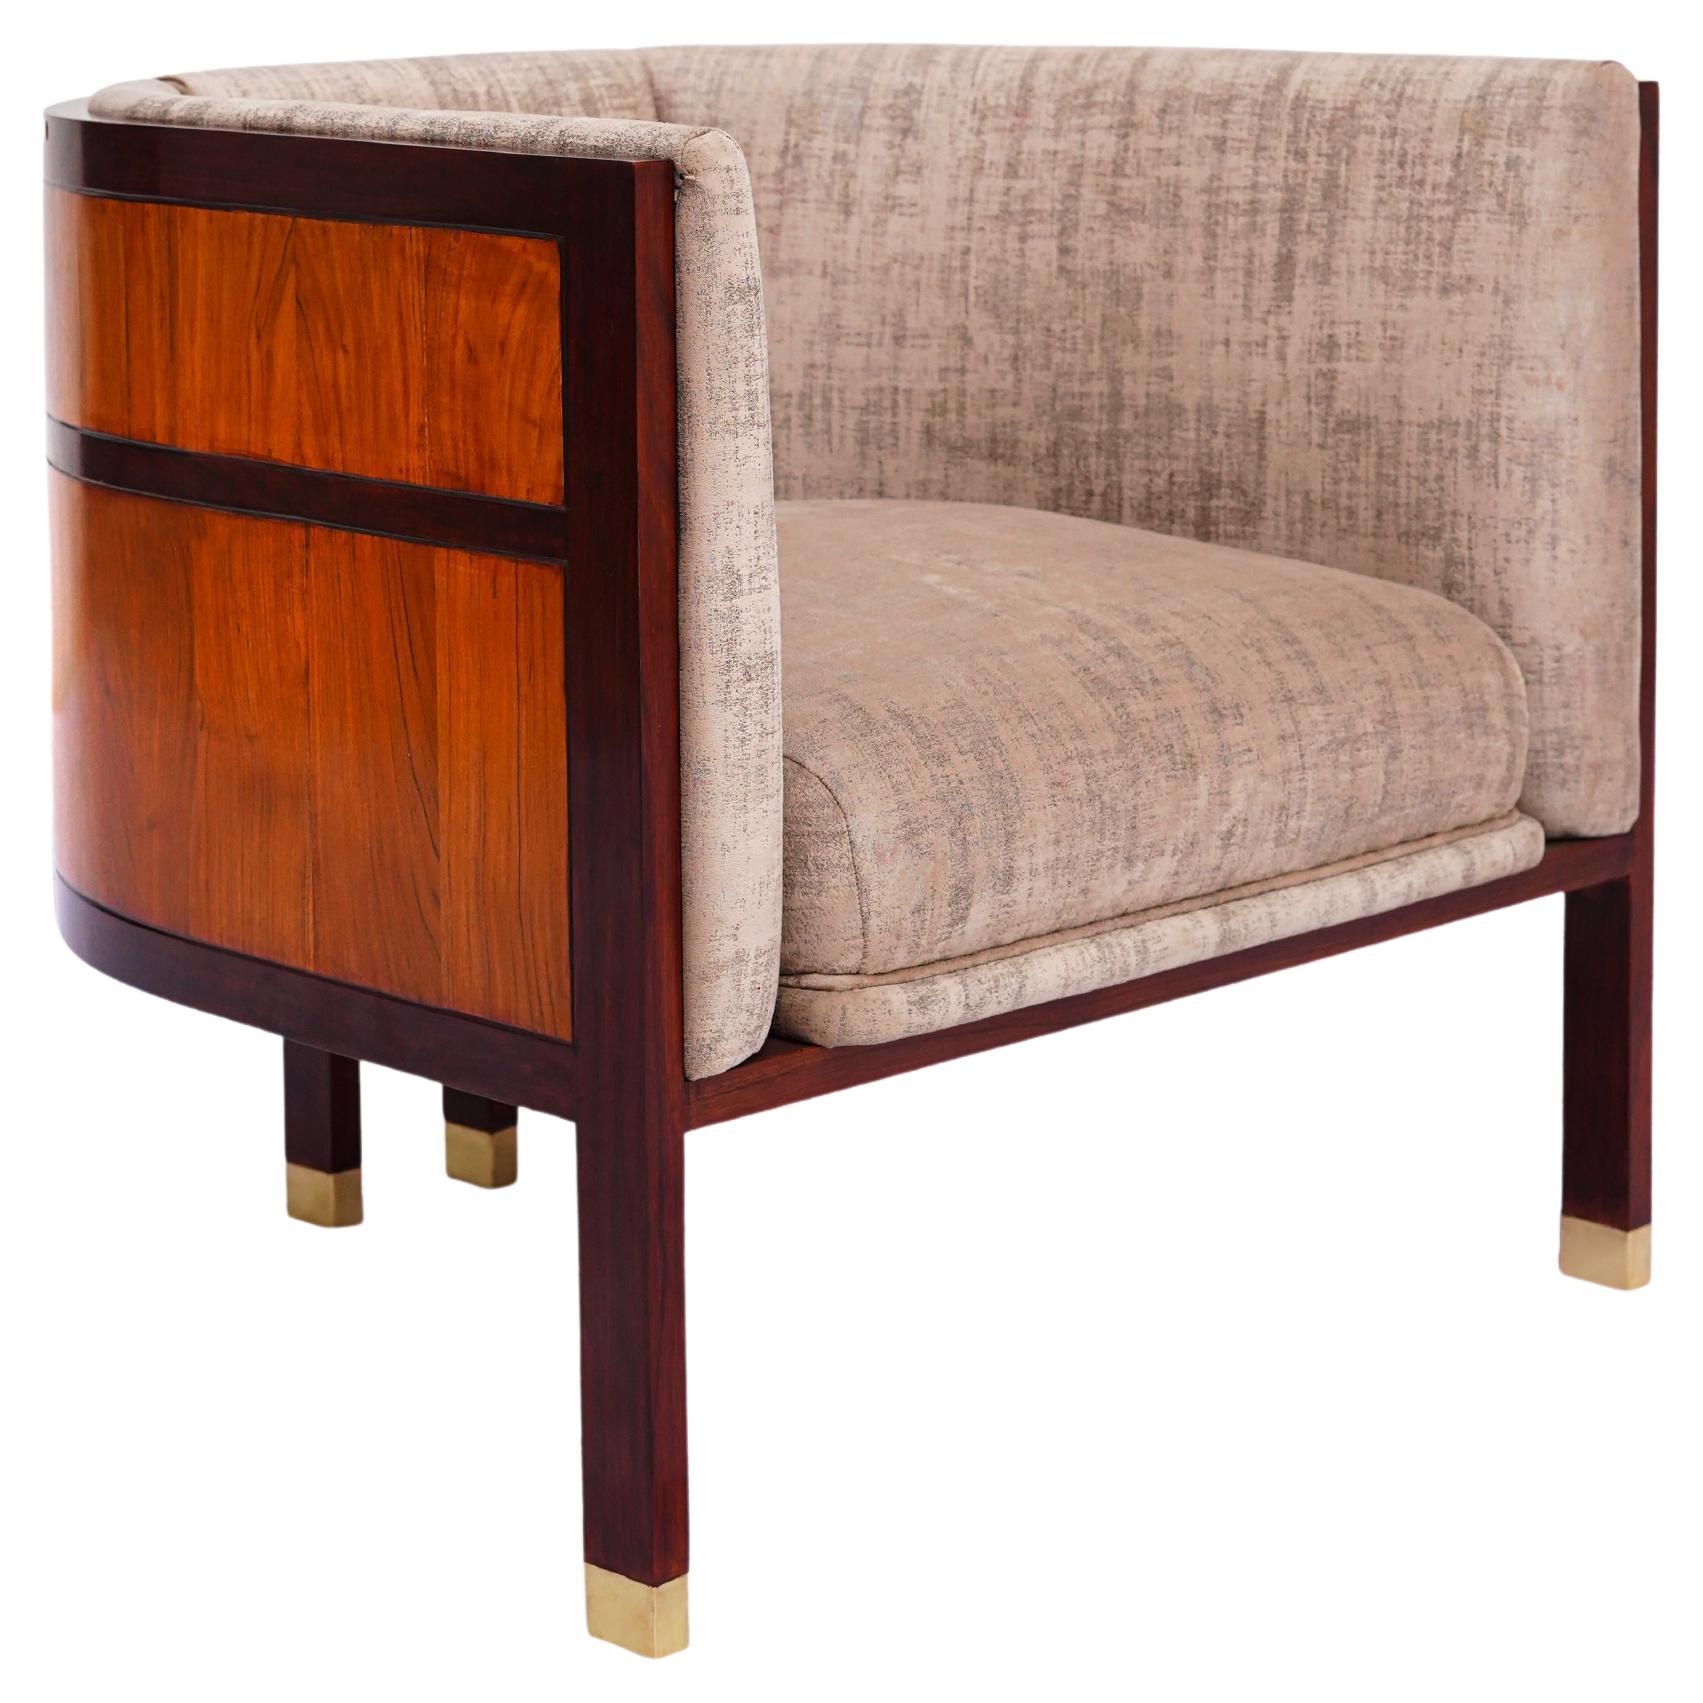 Original lounge chair, Barrel chair, club chair, bold, modern, walnut wood For Sale